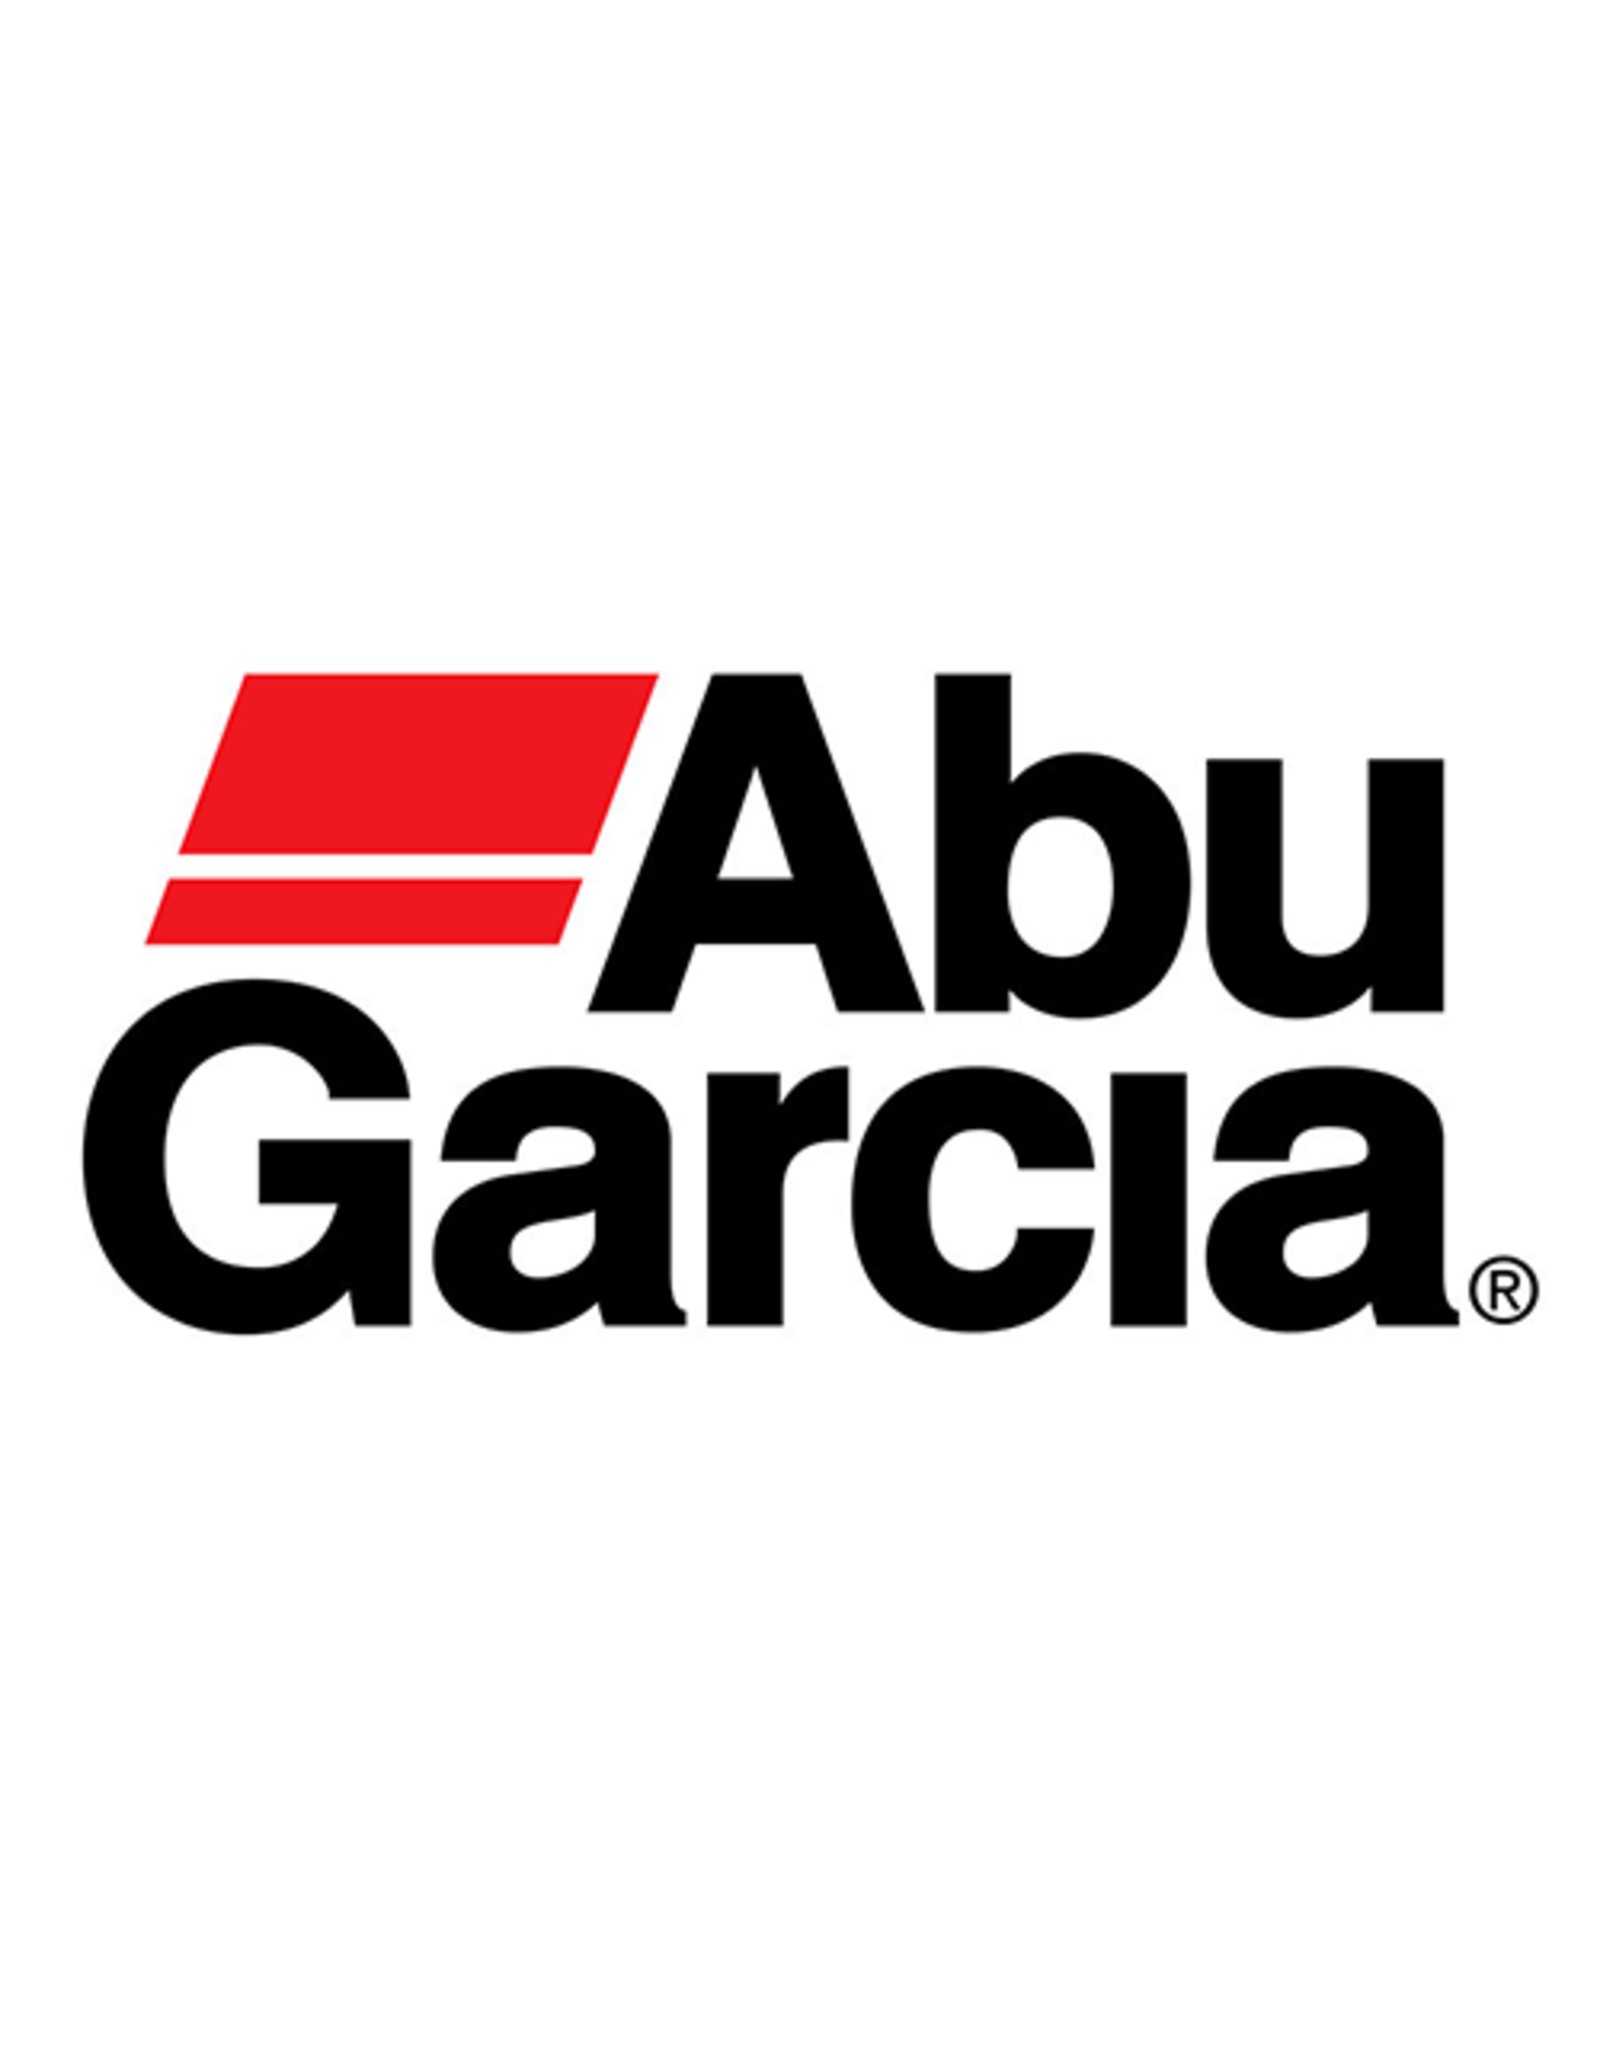 Abu Garcia 61602  BAIL MOUNT